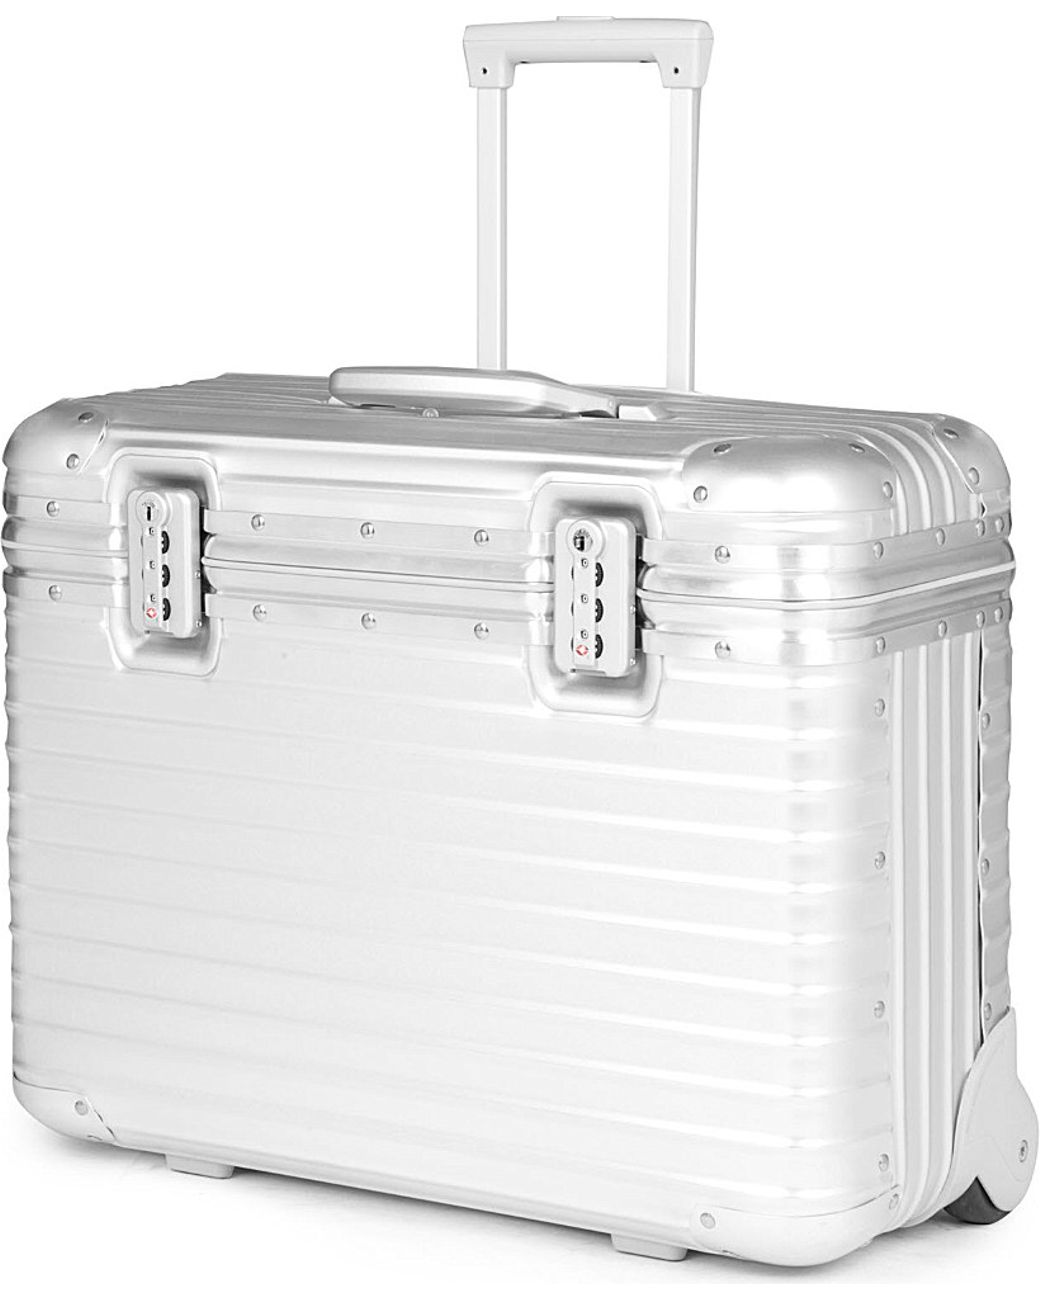 Rimowa Pilot Suitcase | lupon.gov.ph